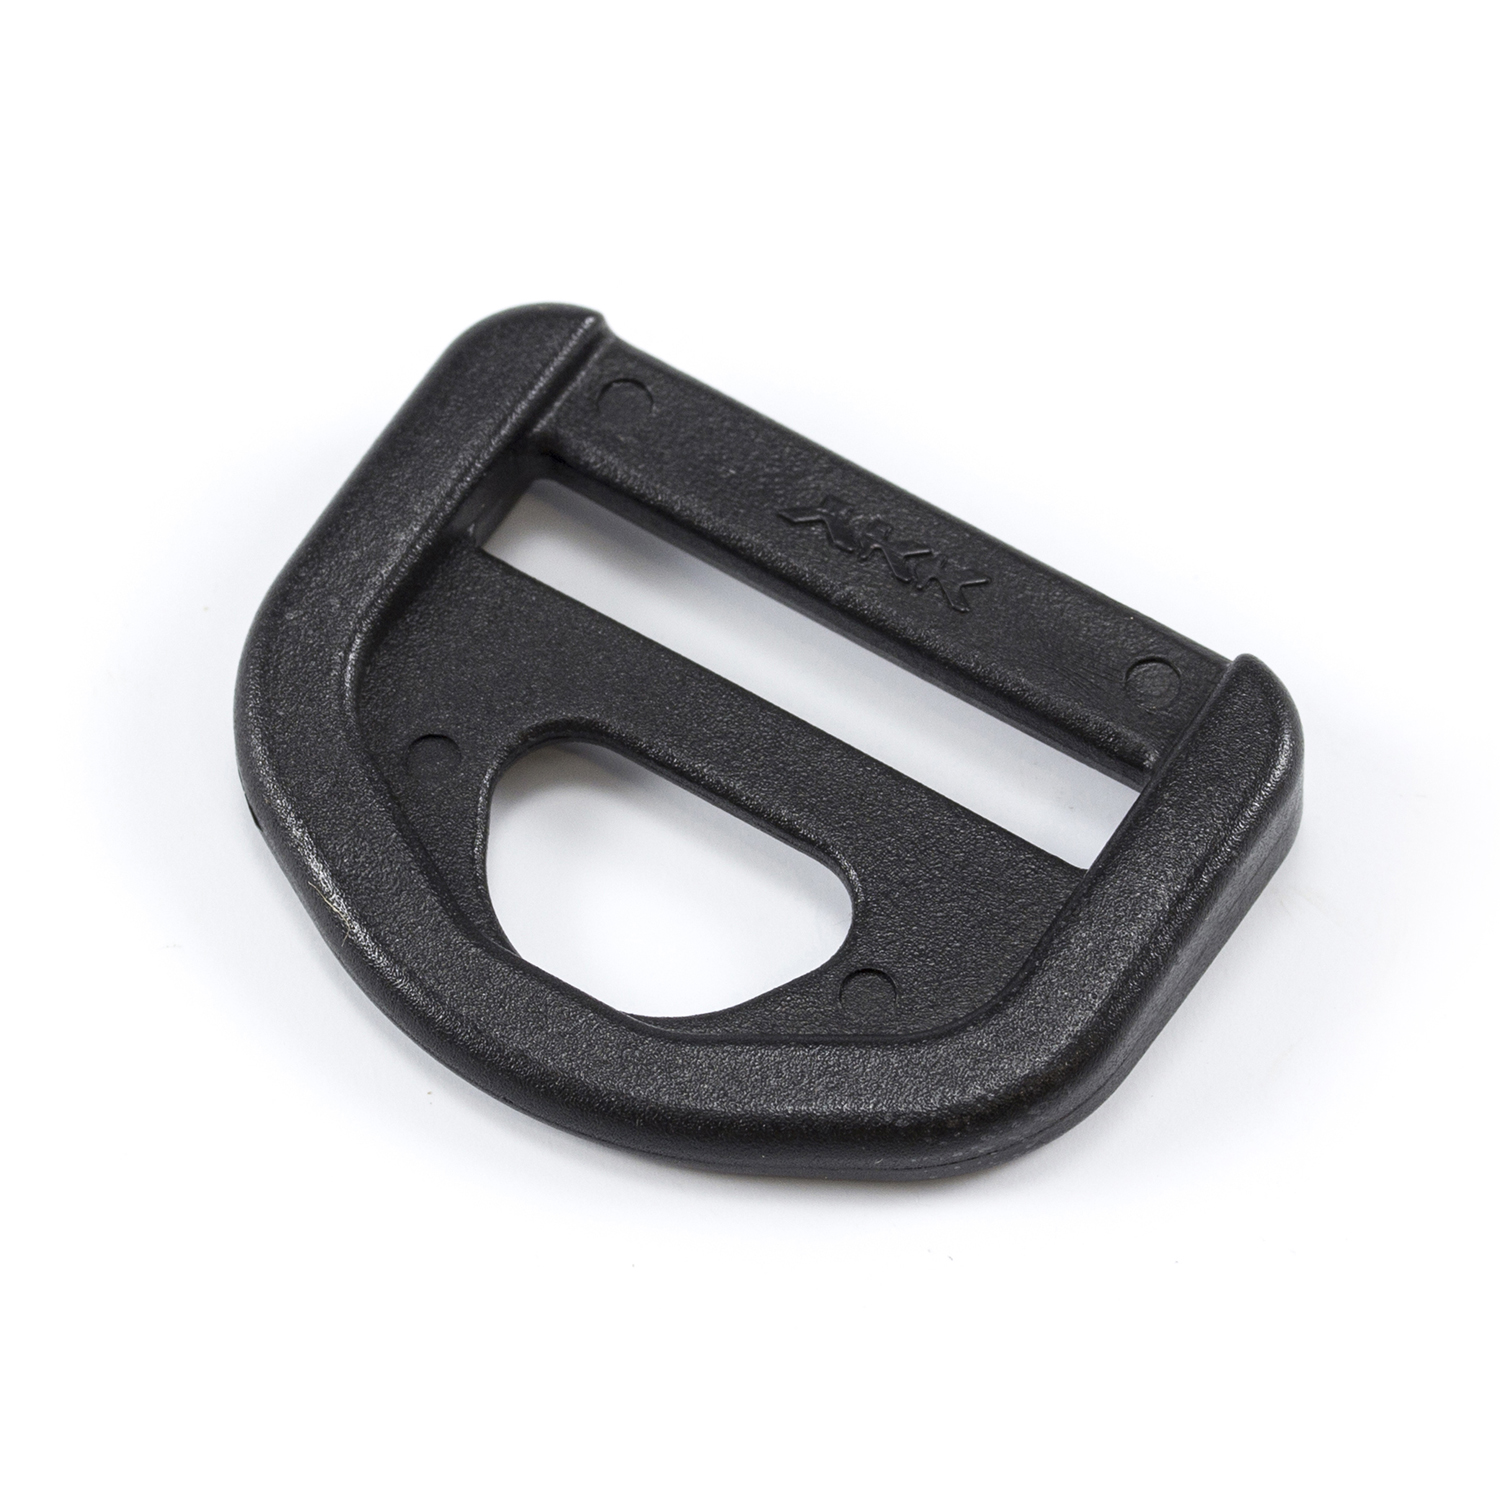 TOPS 1.5” D-Ring View Binders, 4-pack | Costco